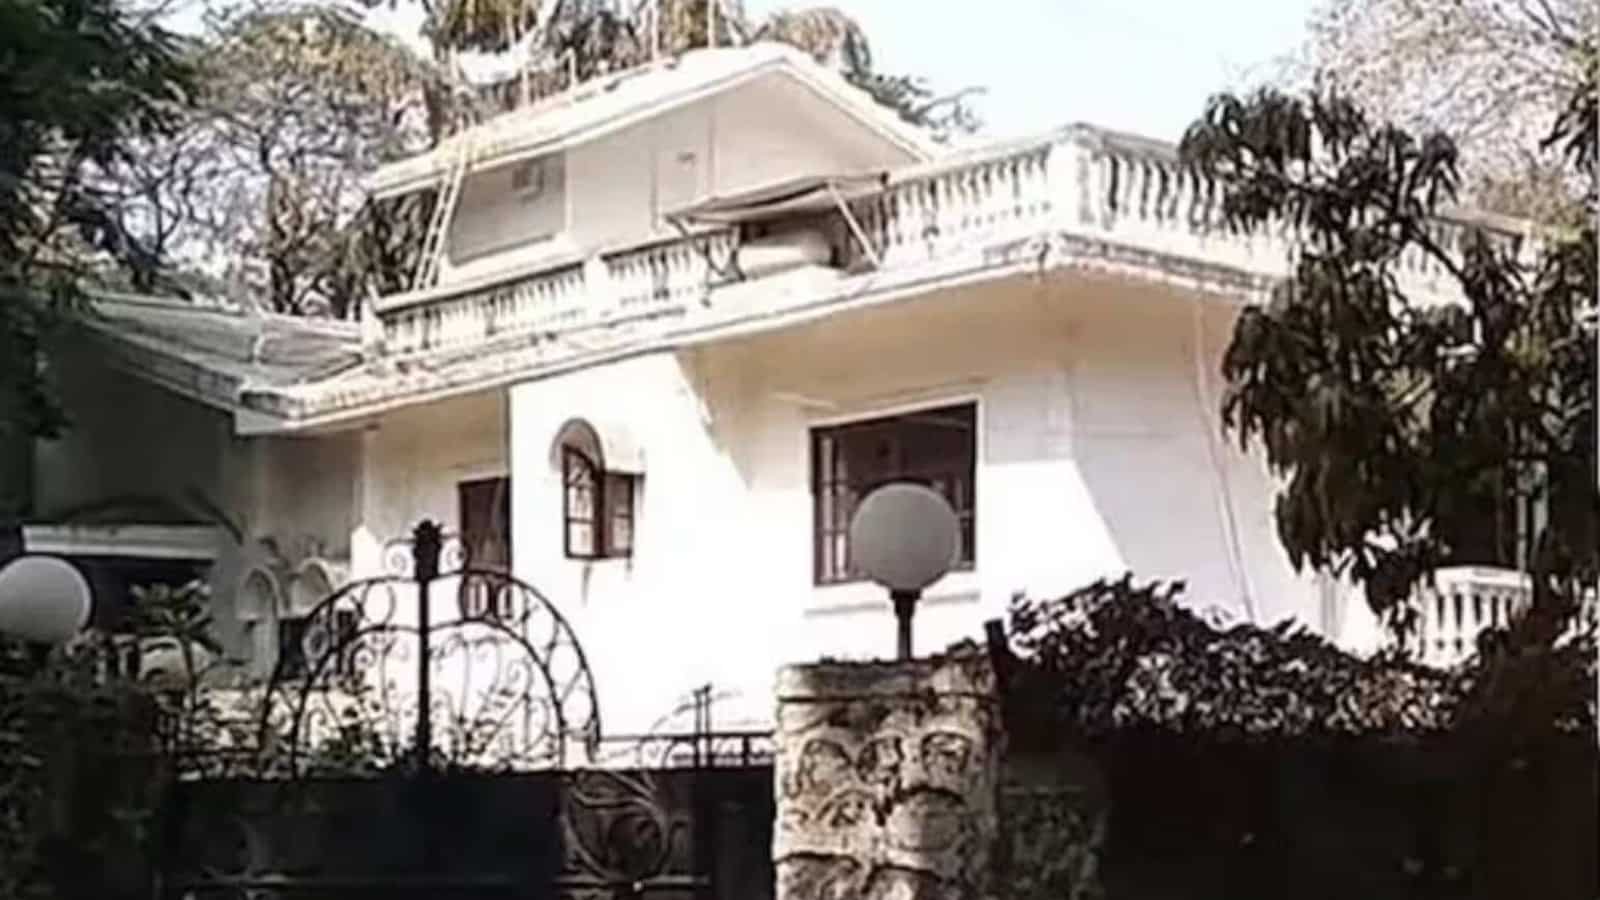 Godrej buys Bollywood legend Raj Kapoor’s bungalow in Mumbai for Rs 100 crore